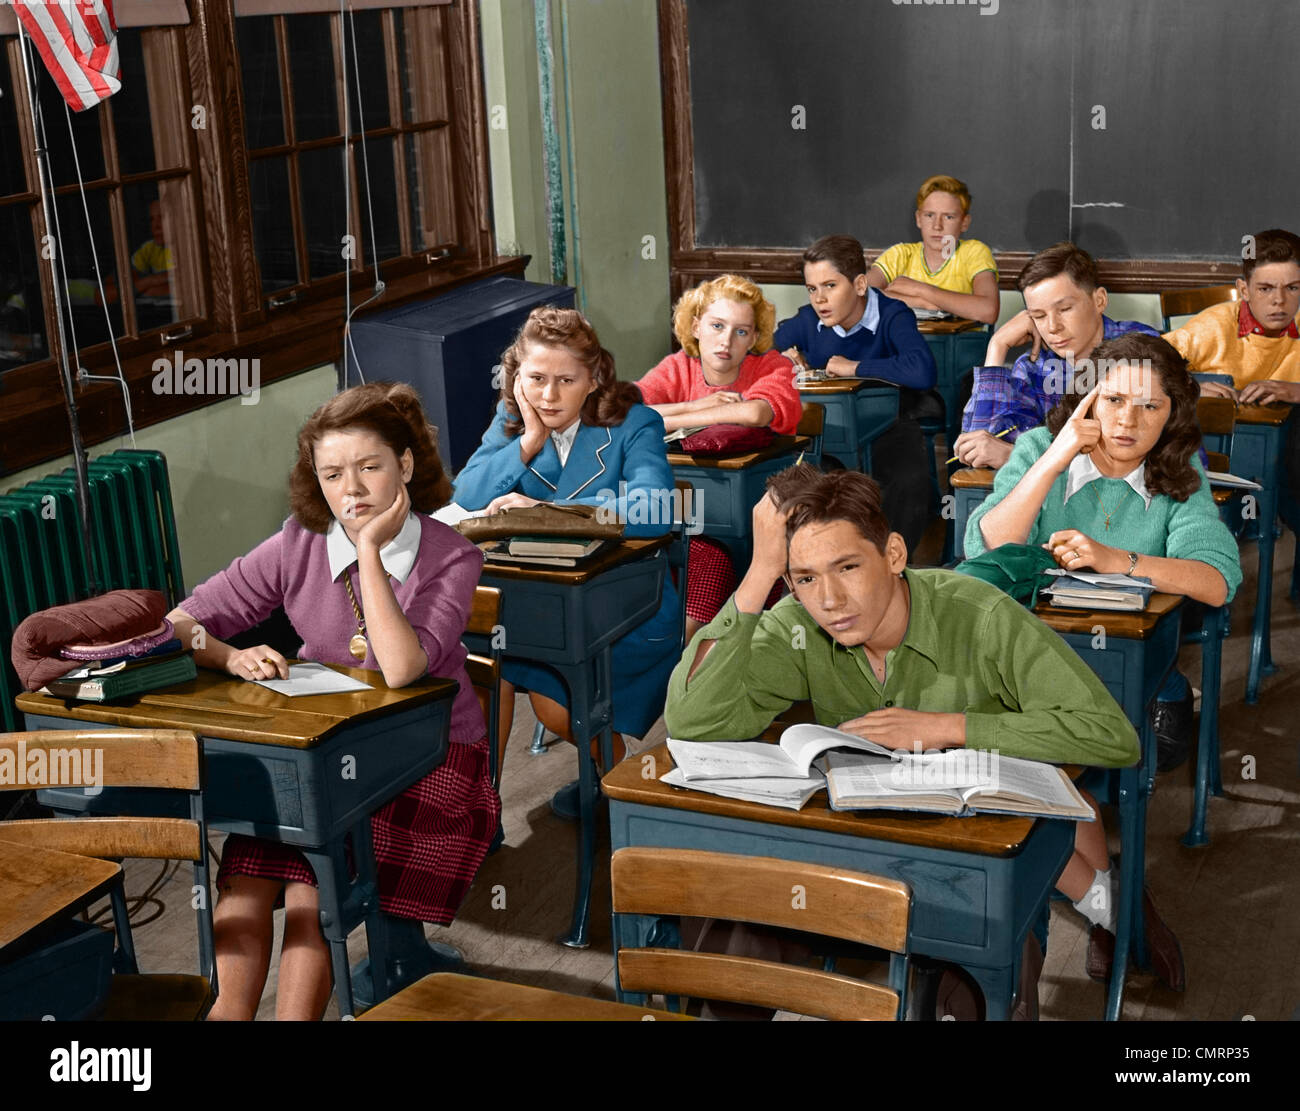 1950s HIGH SCHOOL CLASSROOM OF BORED SLEEPY STUDENTS SITTING AT DESKS Stock Photo